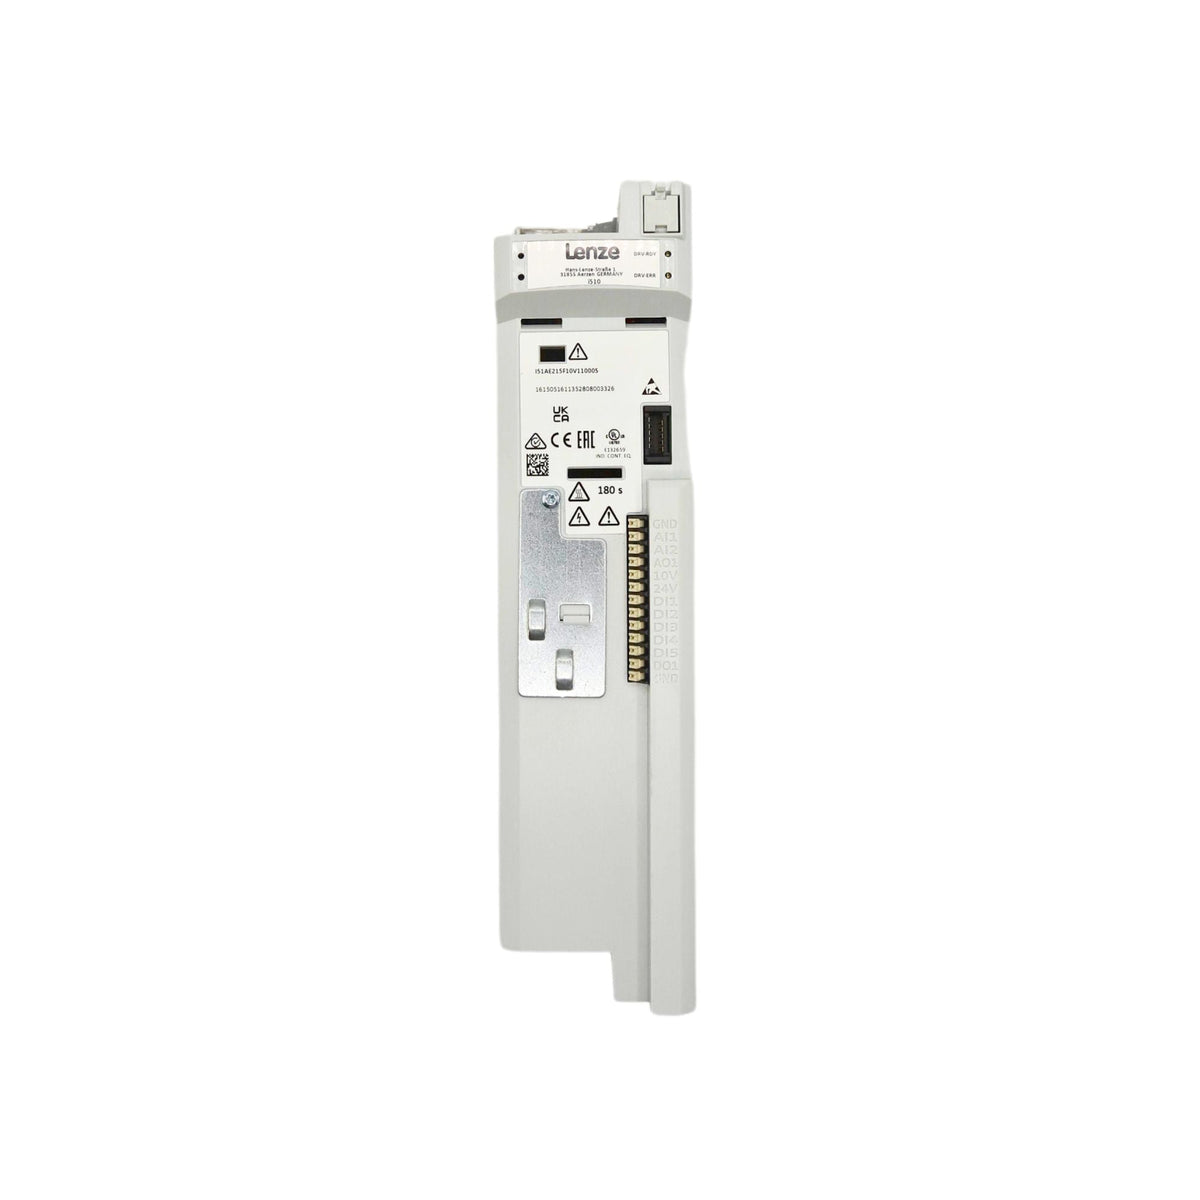 Lenze | i510 2hp Cabinet mount 480volt 5digital inputs, 2 analog inputs, 1 digital output 1 analog Output, 1 relay | I51AE215F10V11000S - front view